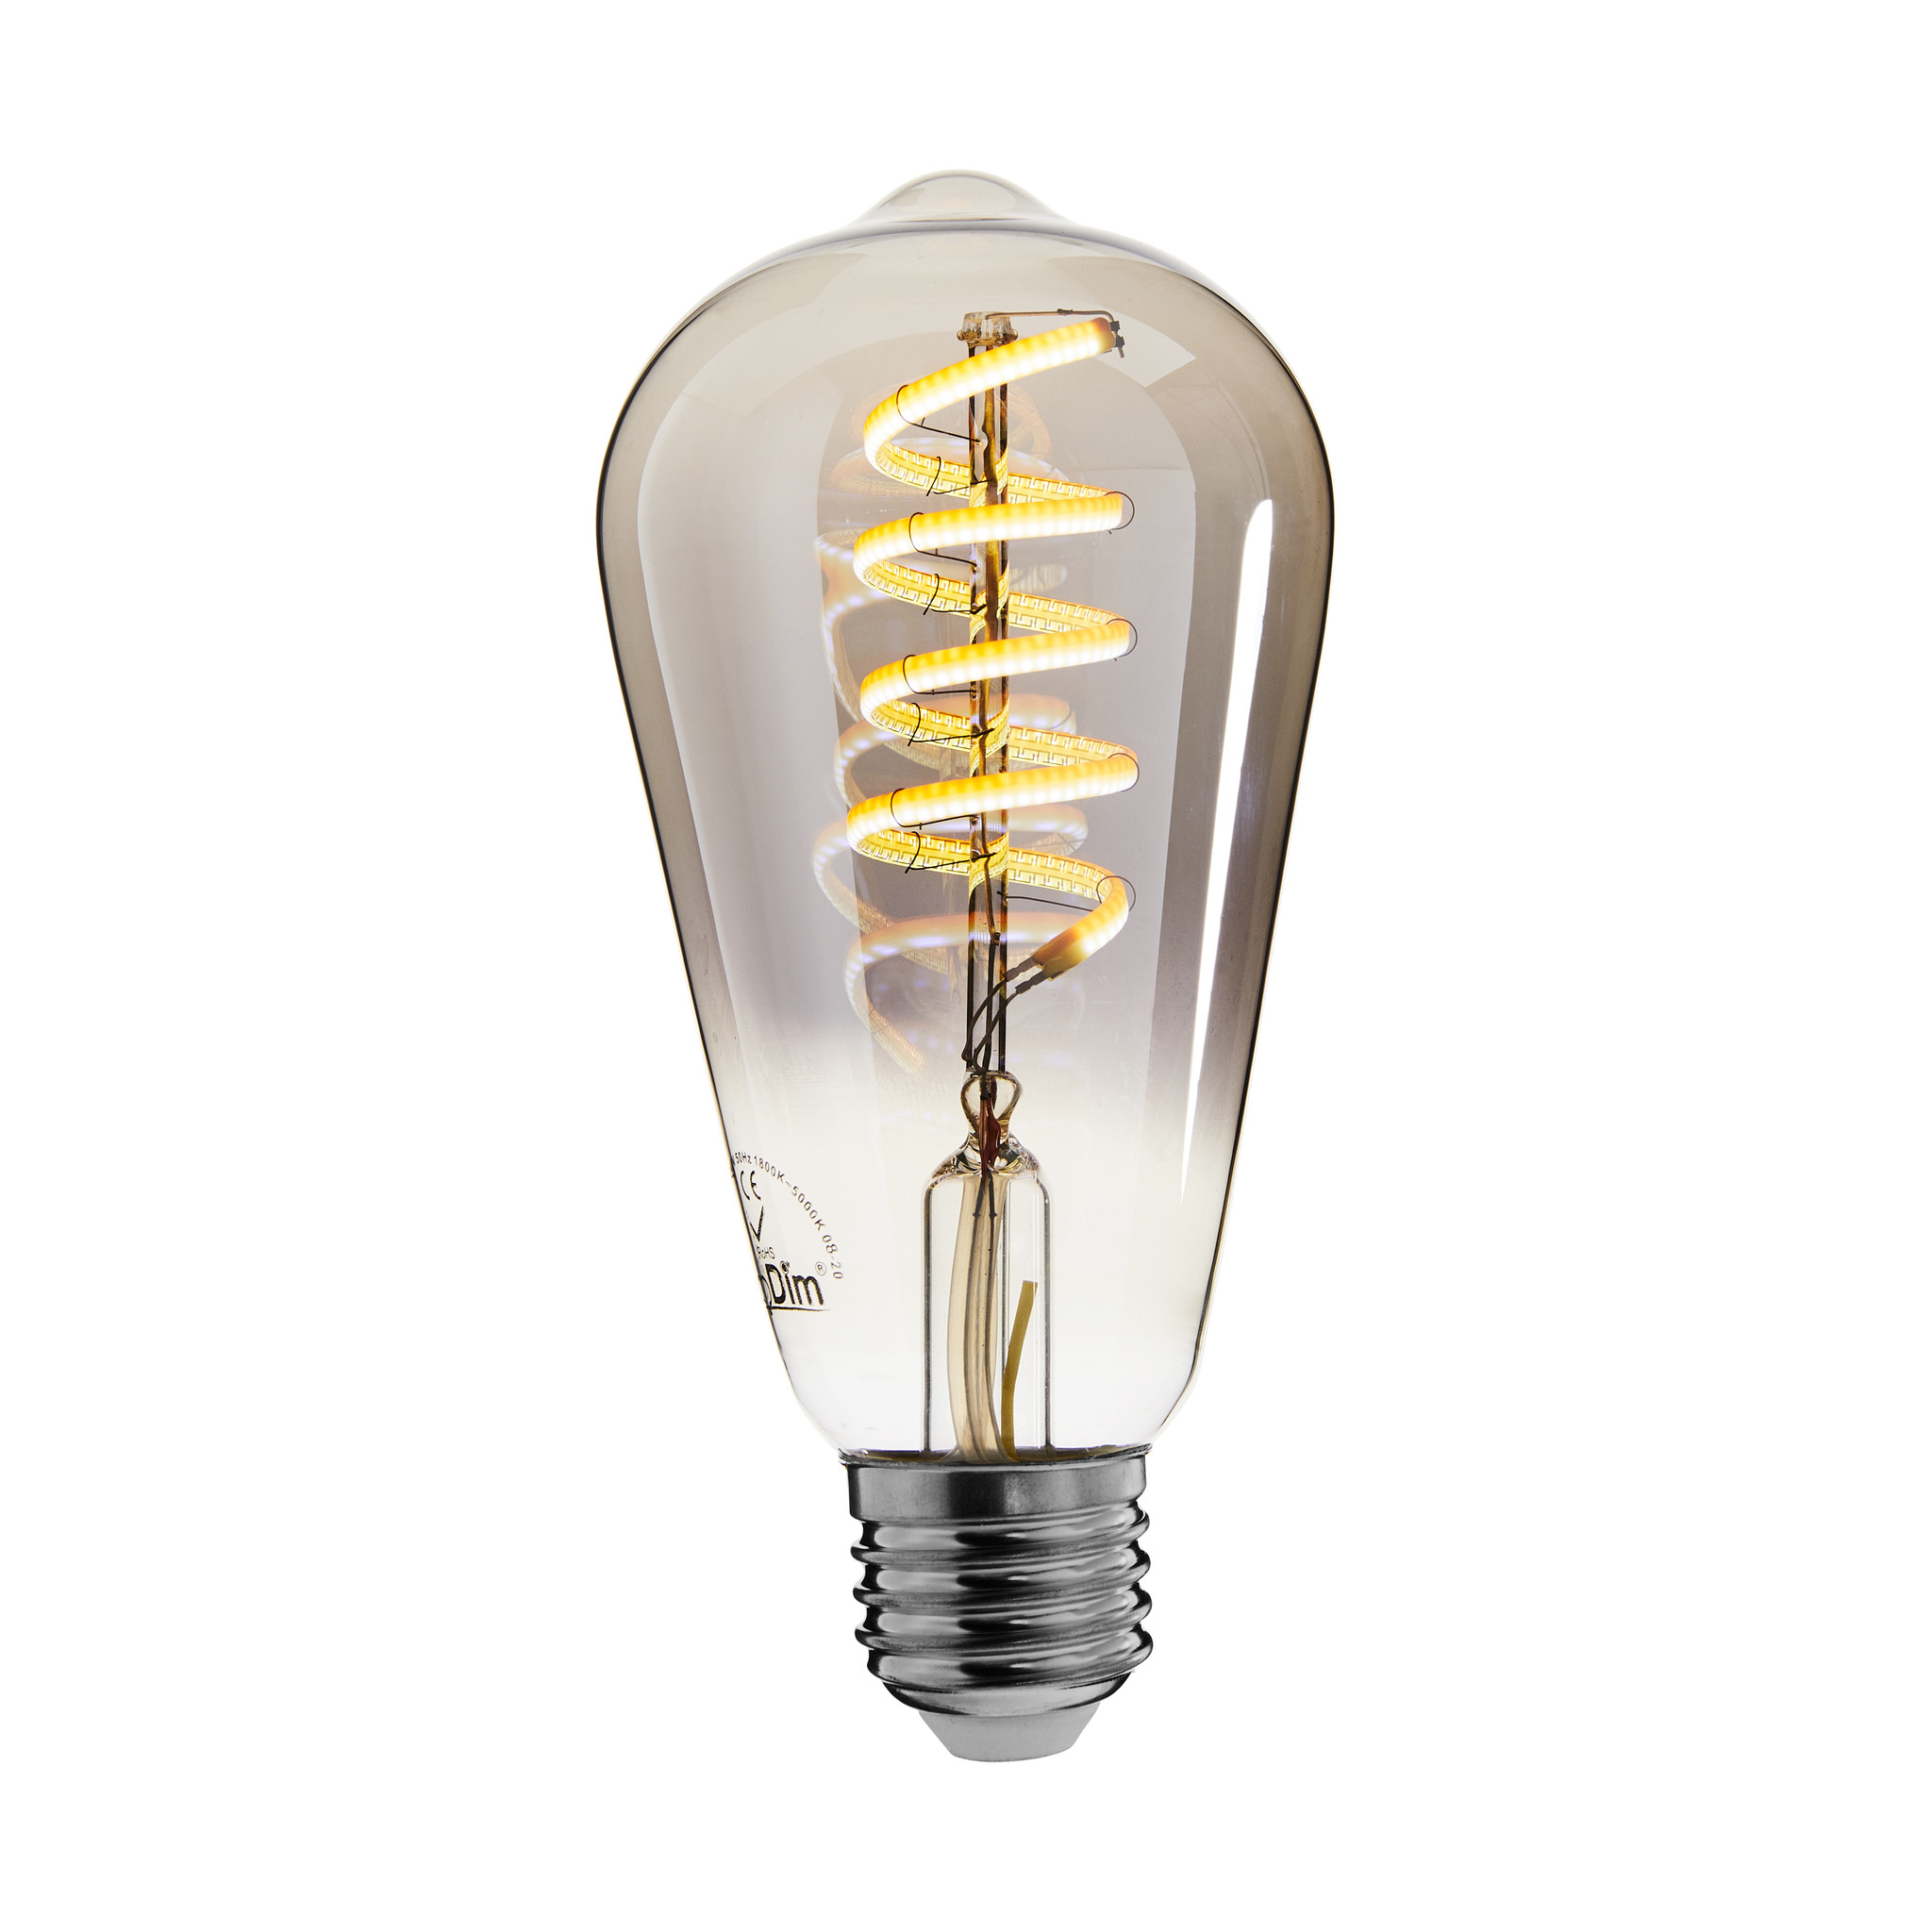 ED-10033 Zigbee led filament bulb dimmable E27, edison ST64, Smokey 2000K-4000K